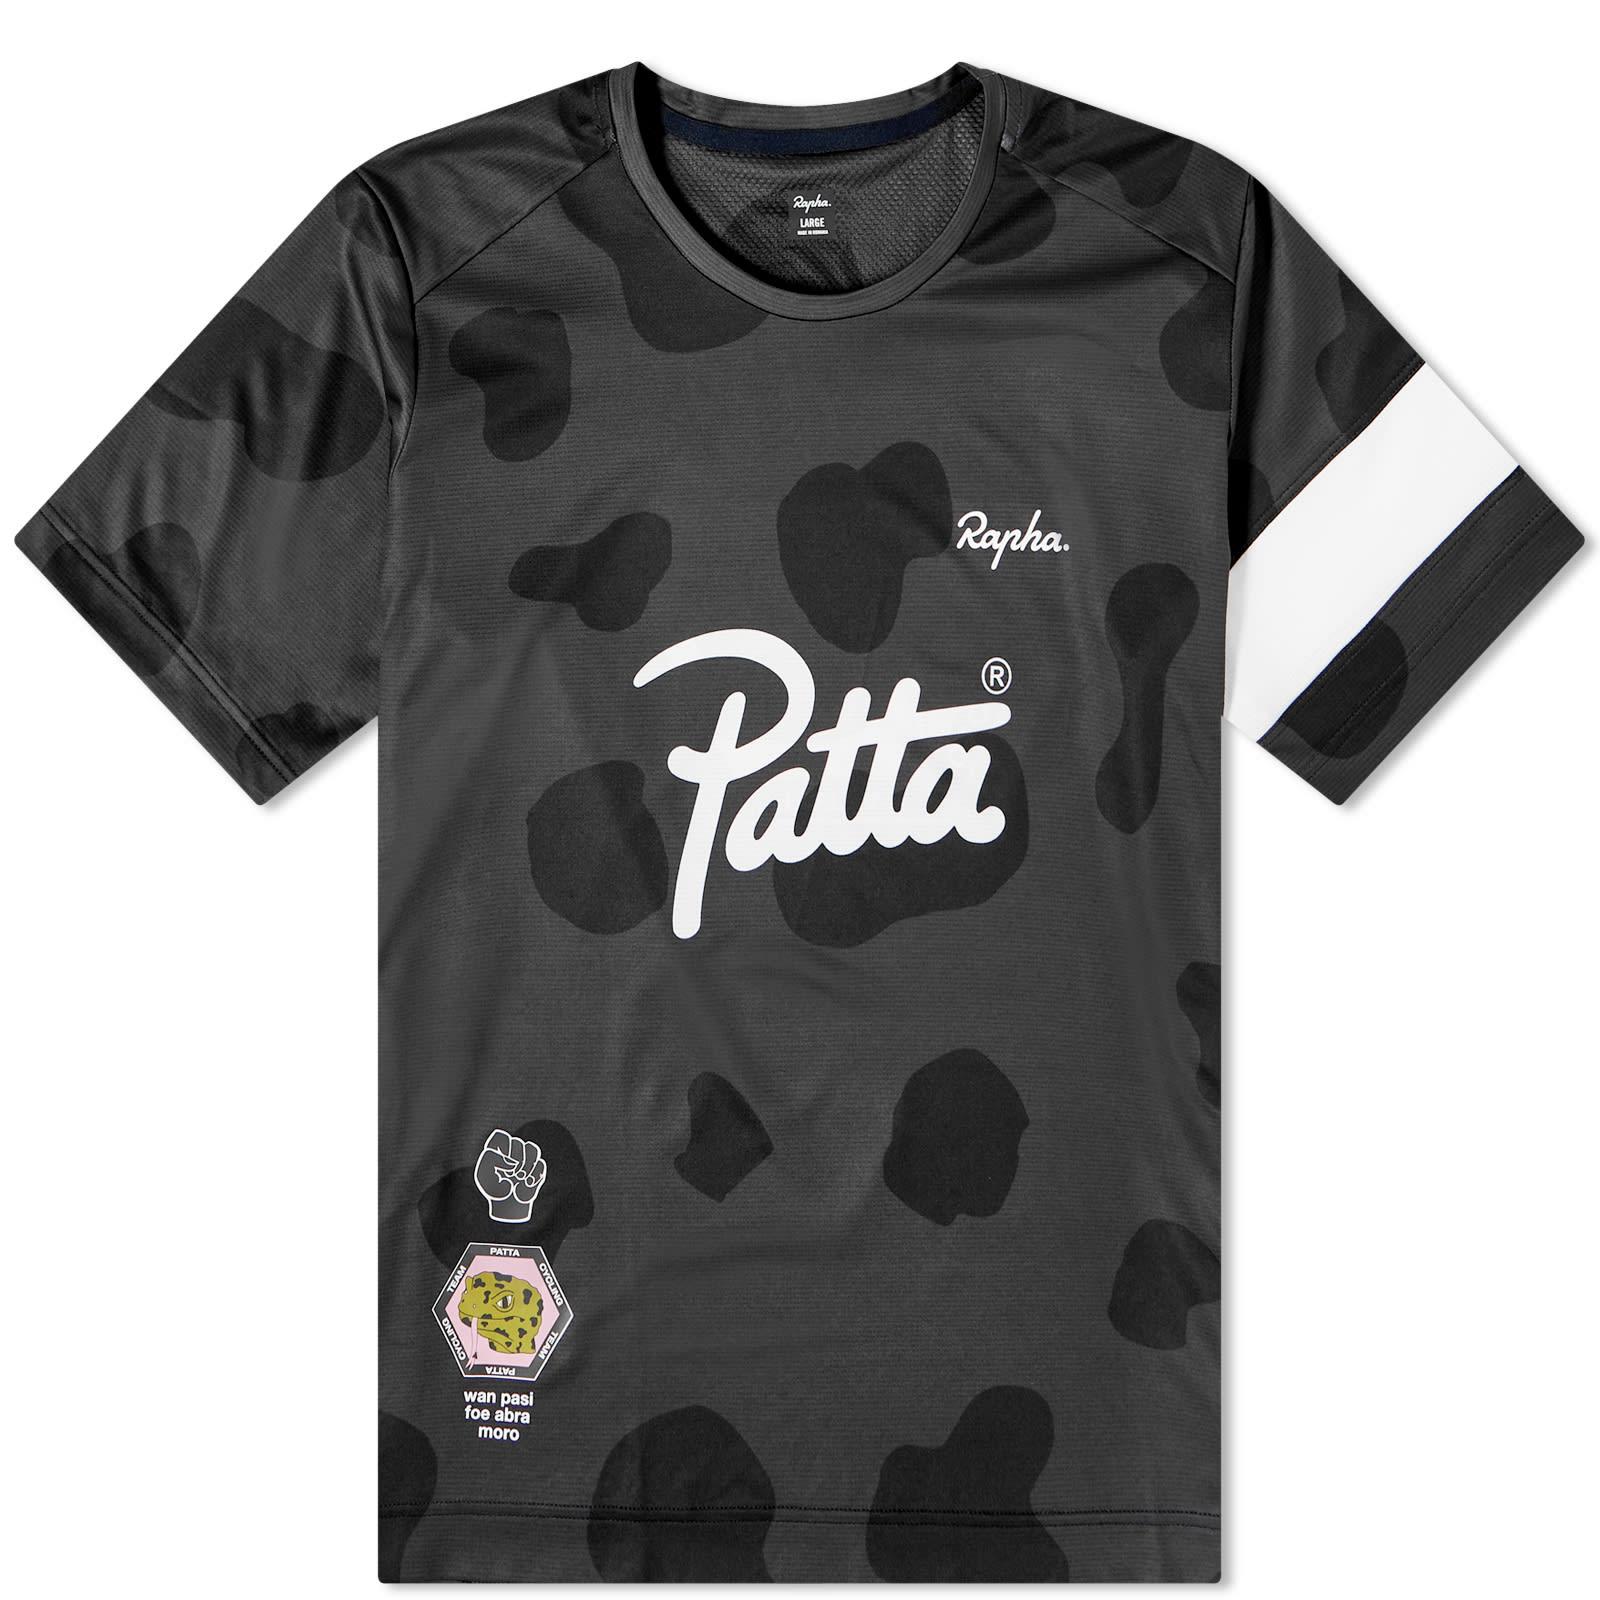 Rapha X Patta Technical T-shirt in Black | Lyst